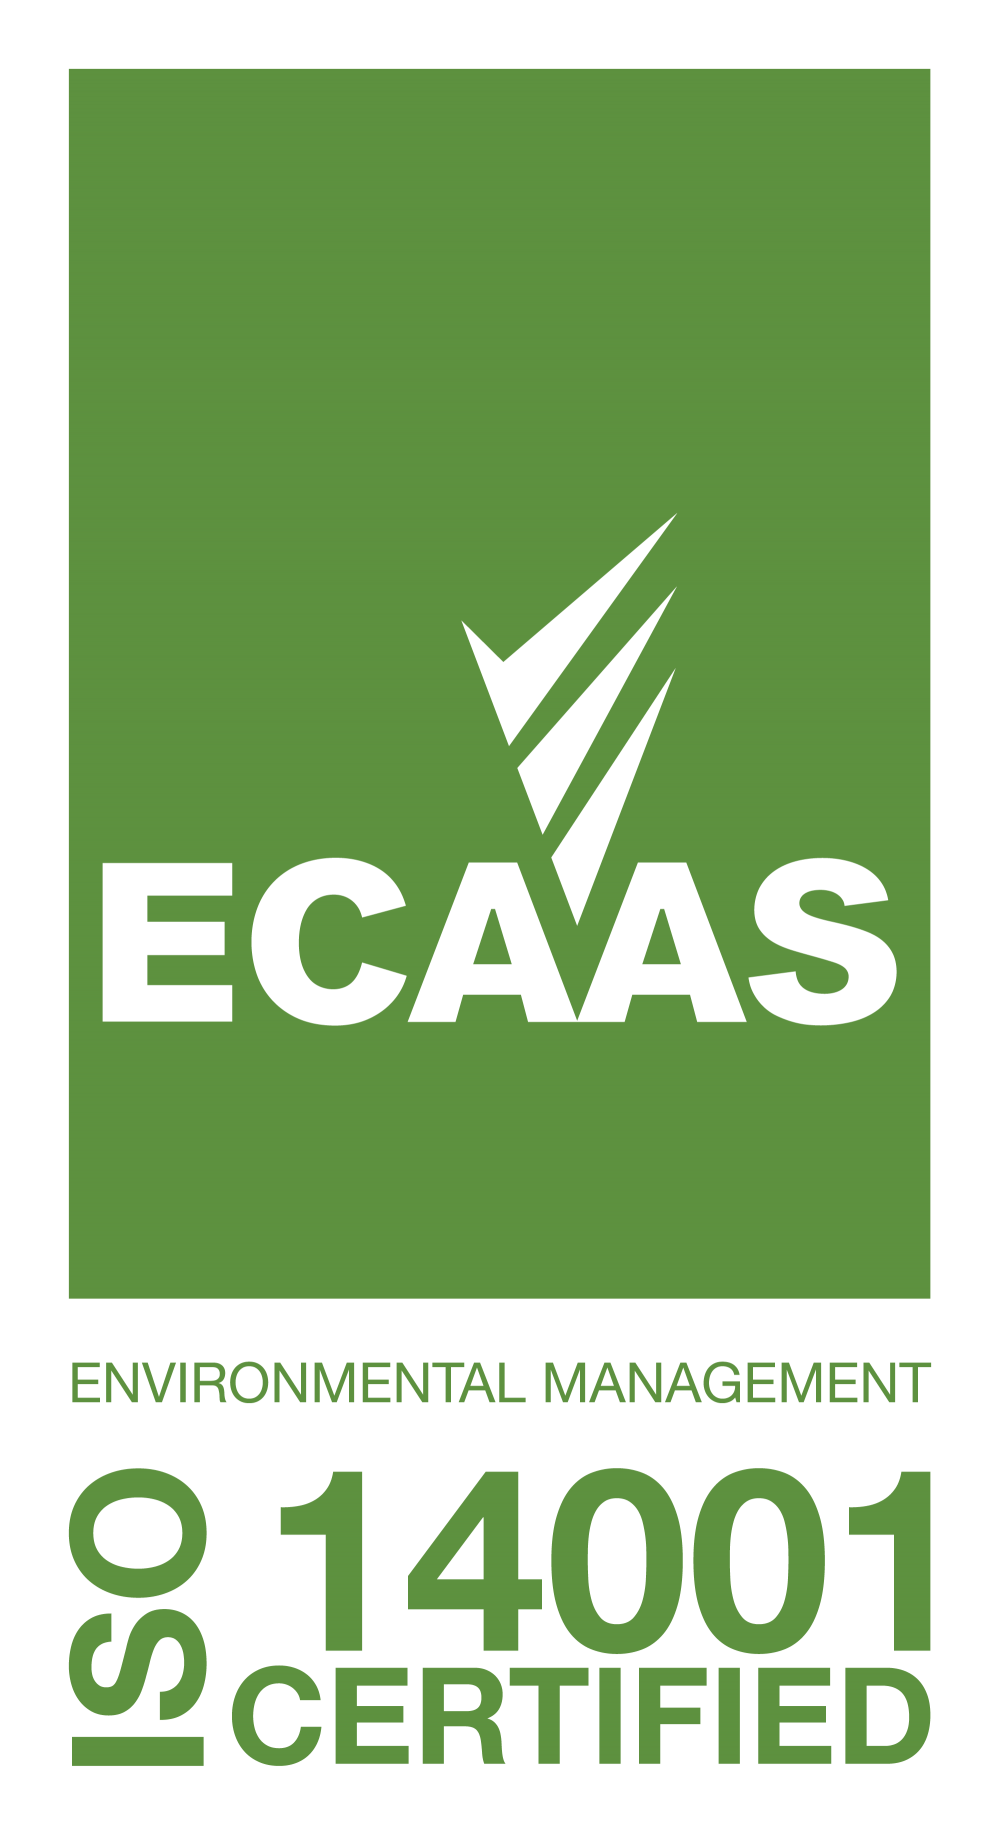 ECAAS Mark_ Vert_ 14001 Environmental Management_ Large